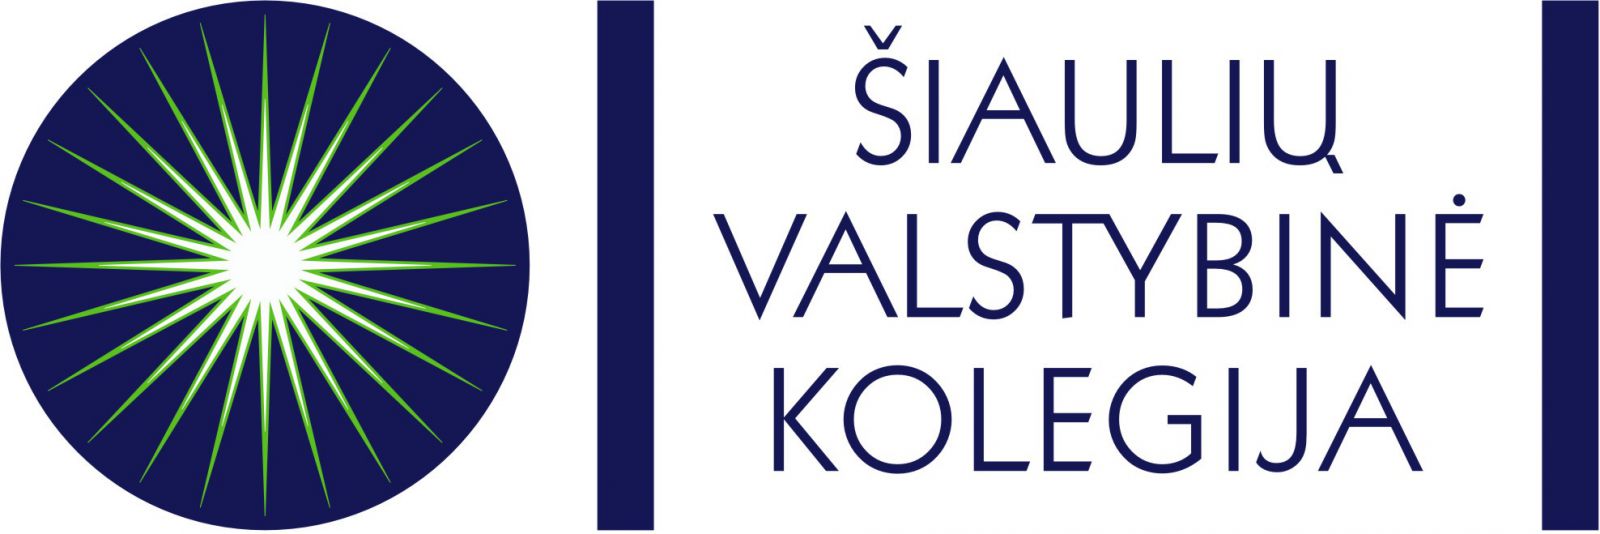 svk logo horizontalus